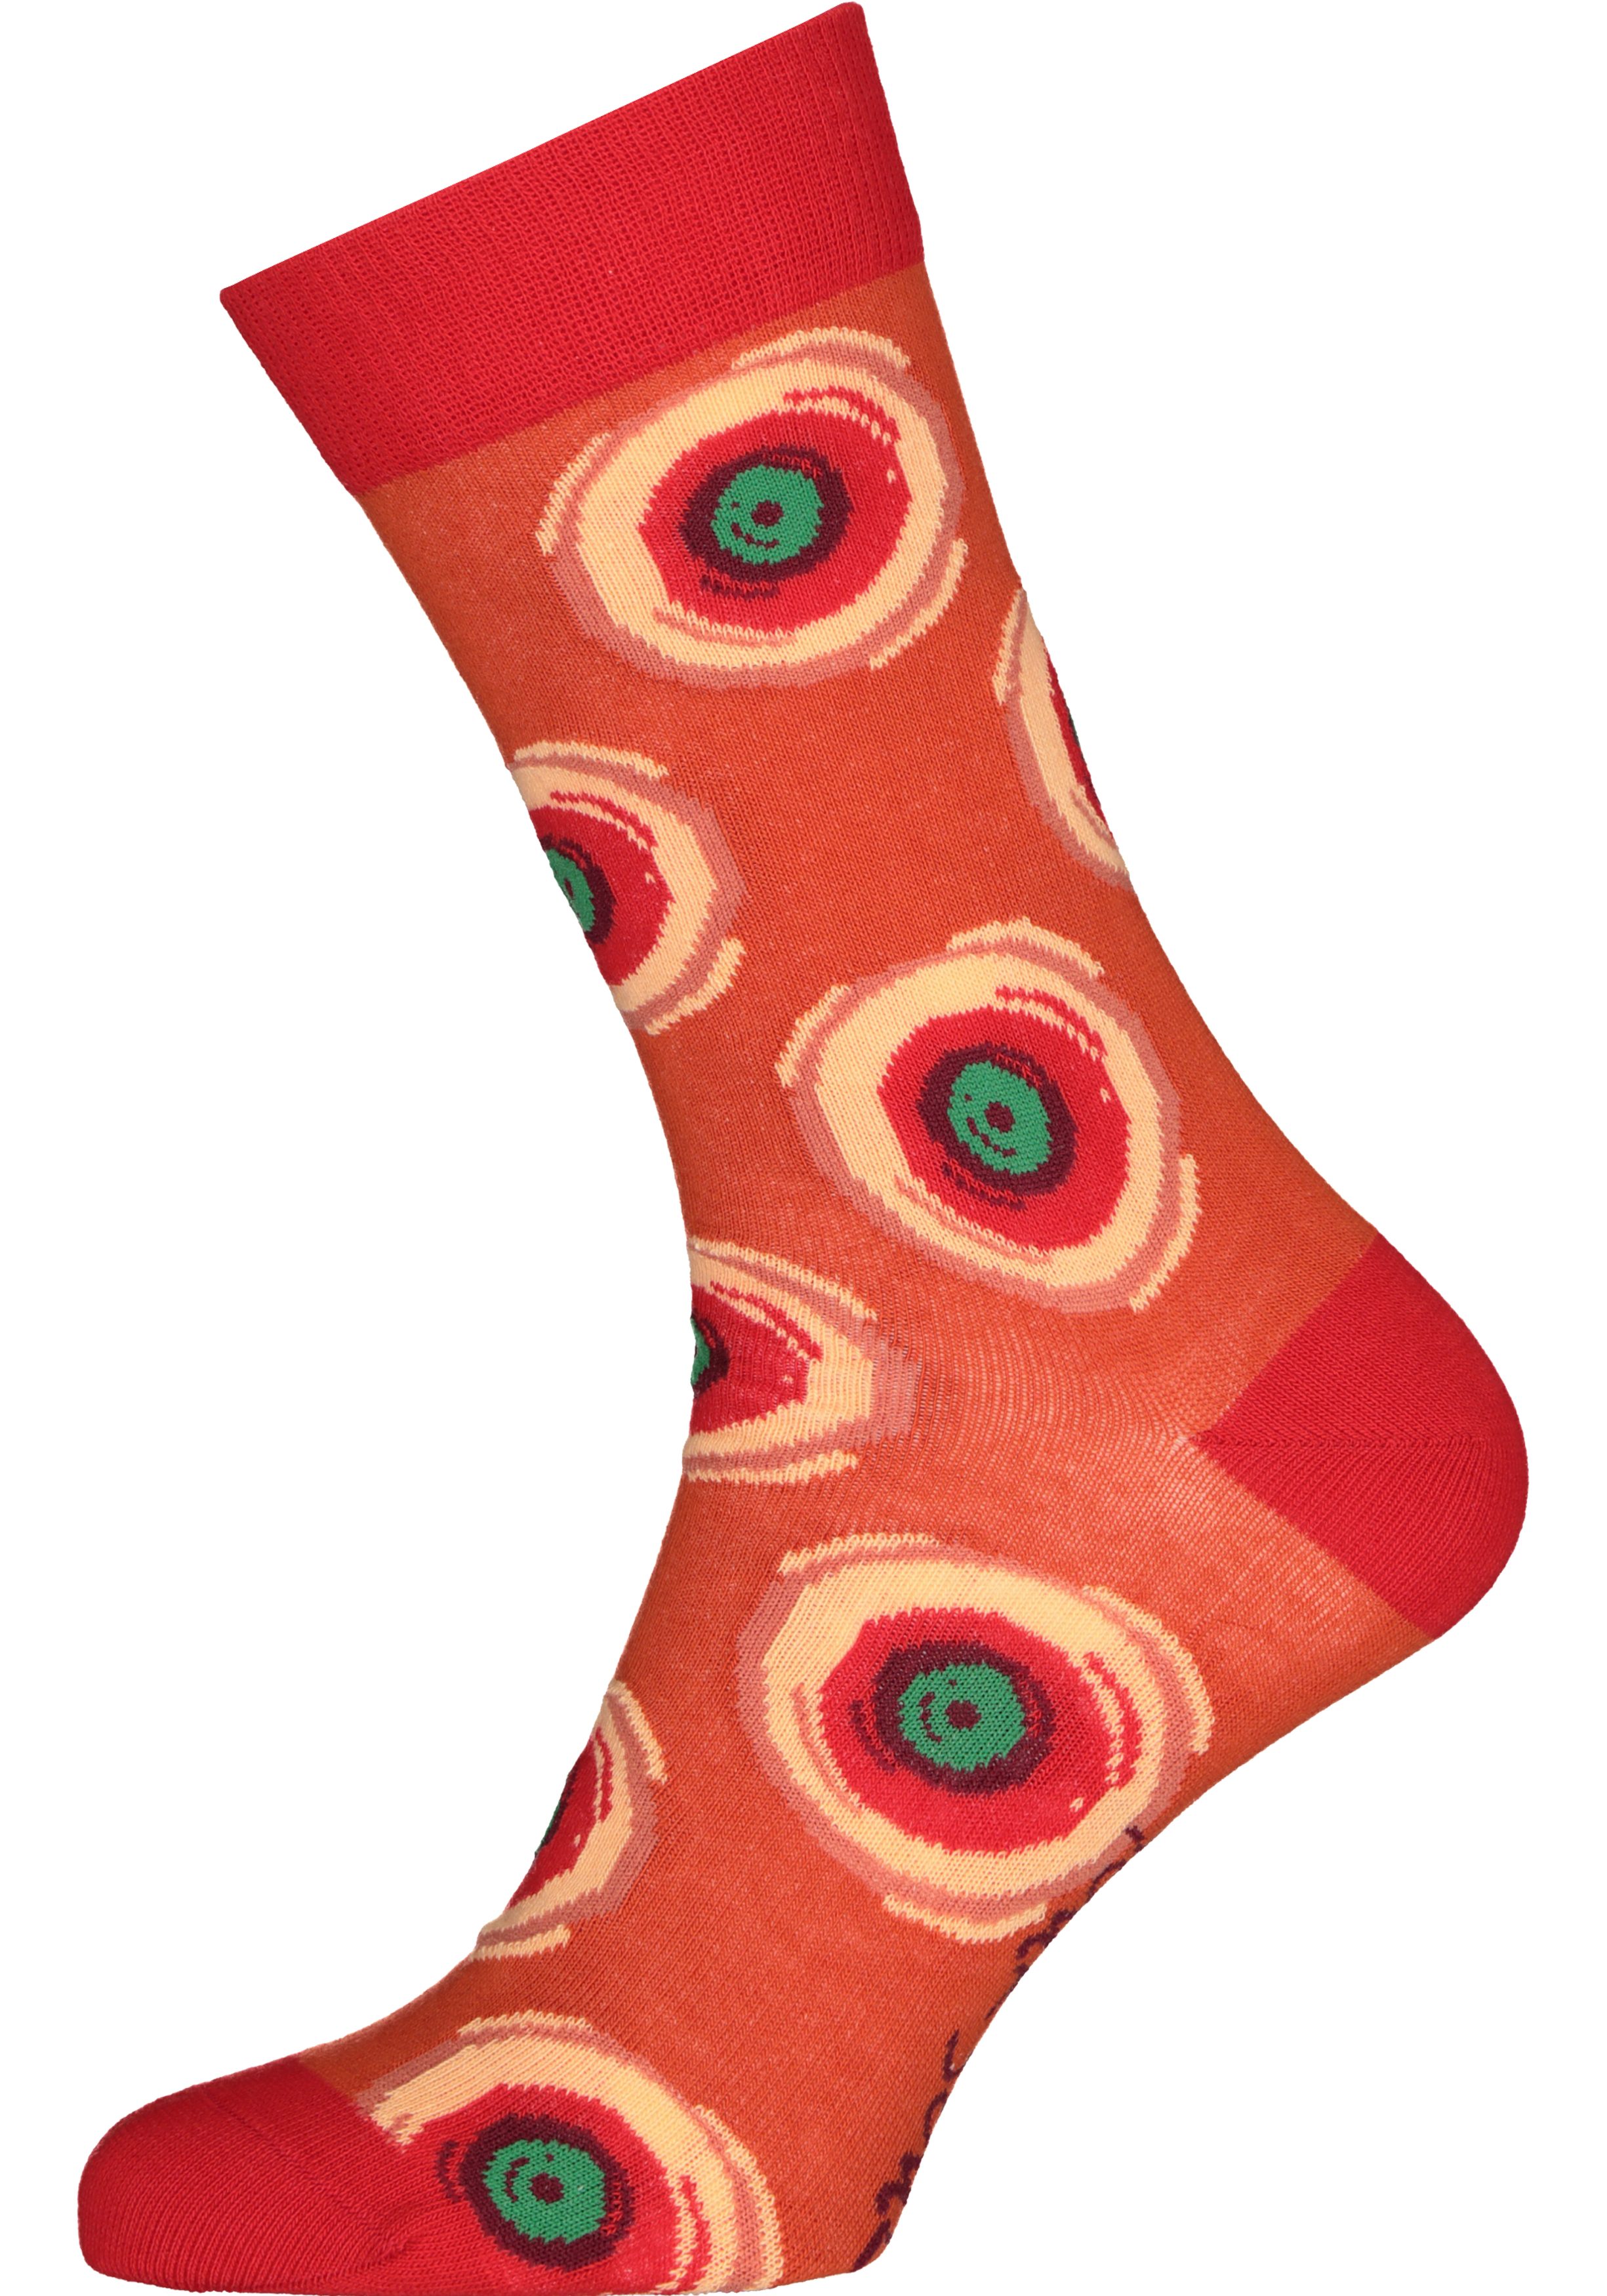 Spiri Socks The All Seeing Eye, unisex sokken, oranje, groen en rood